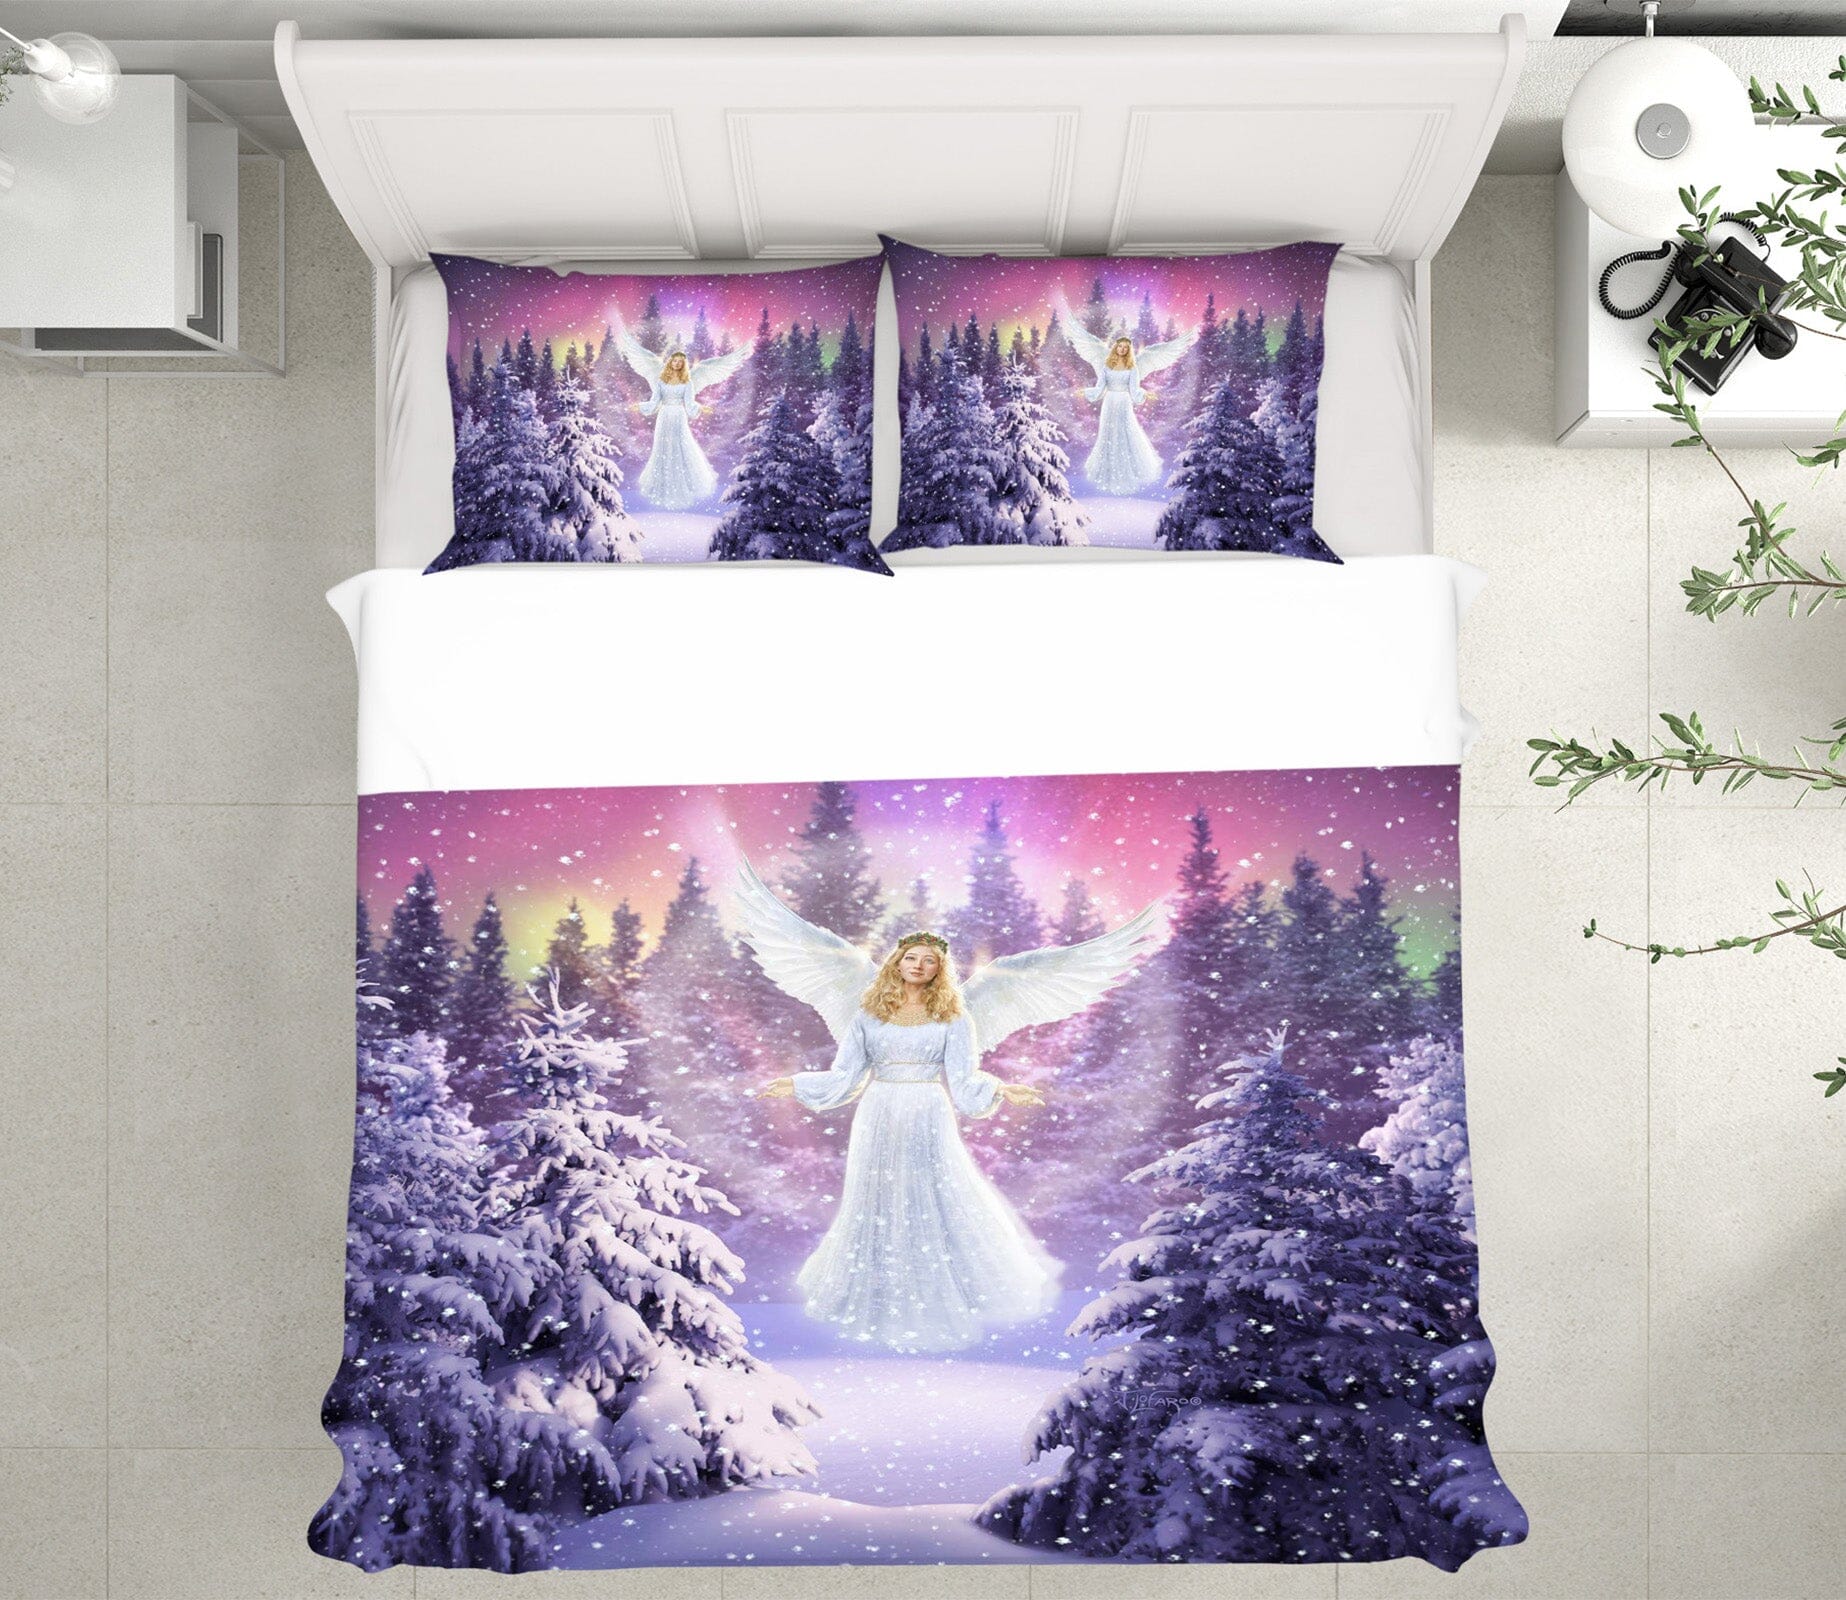 3D Snow Angel 2132 Jerry LoFaro bedding Bed Pillowcases Quilt Quiet Covers AJ Creativity Home 